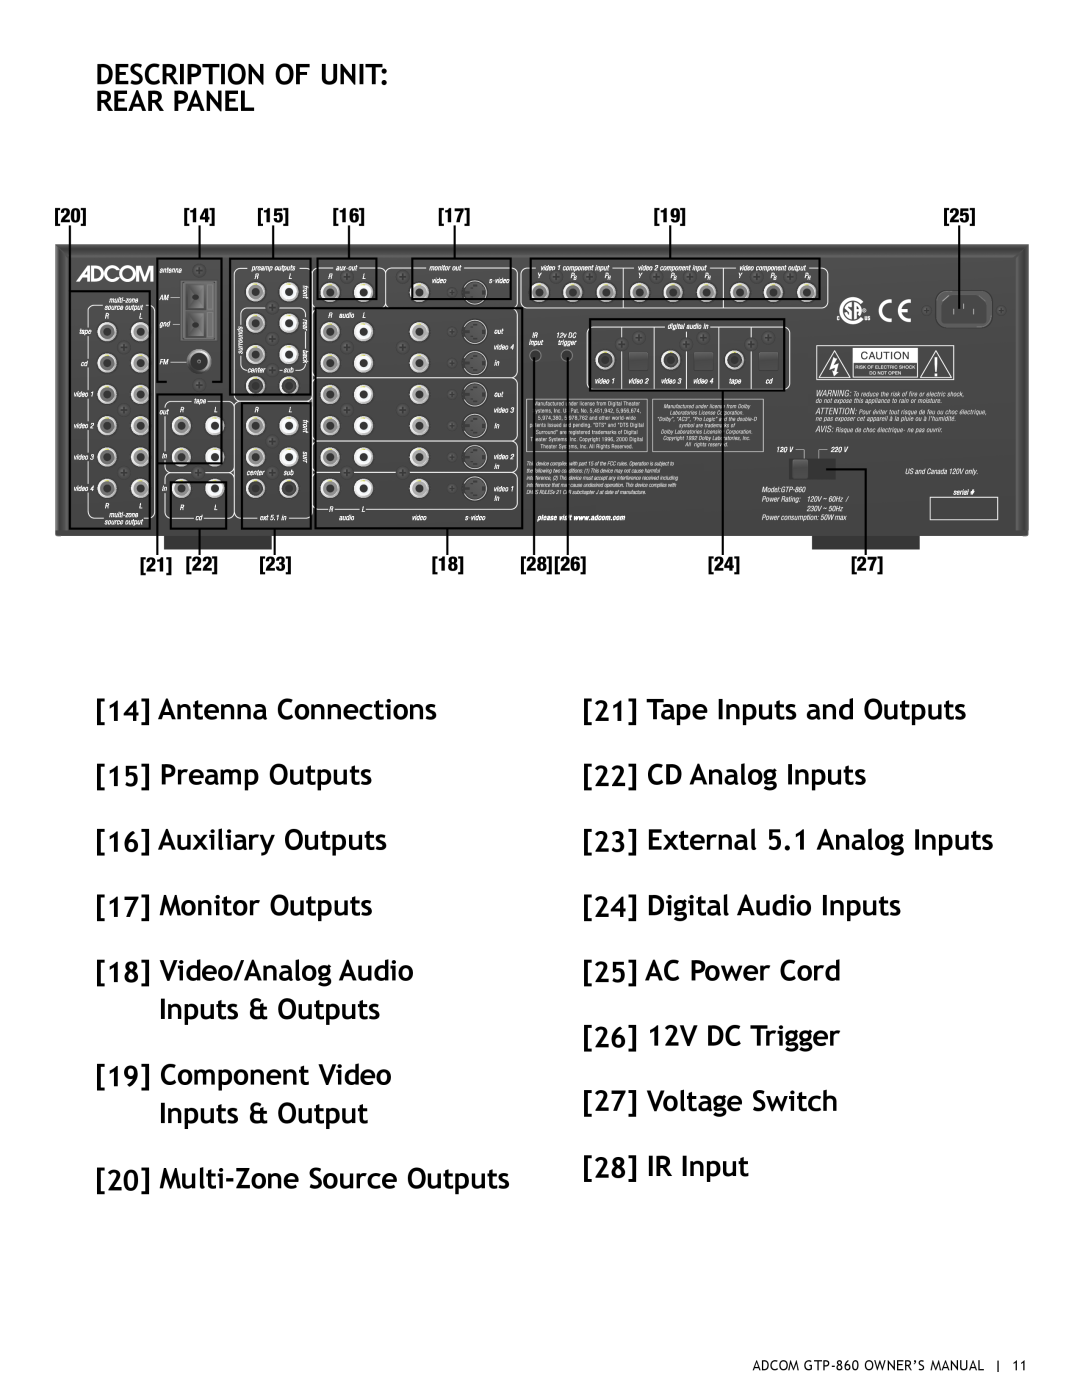 Adcom GTP-860 owner manual Description Of Unit Rear Panel 